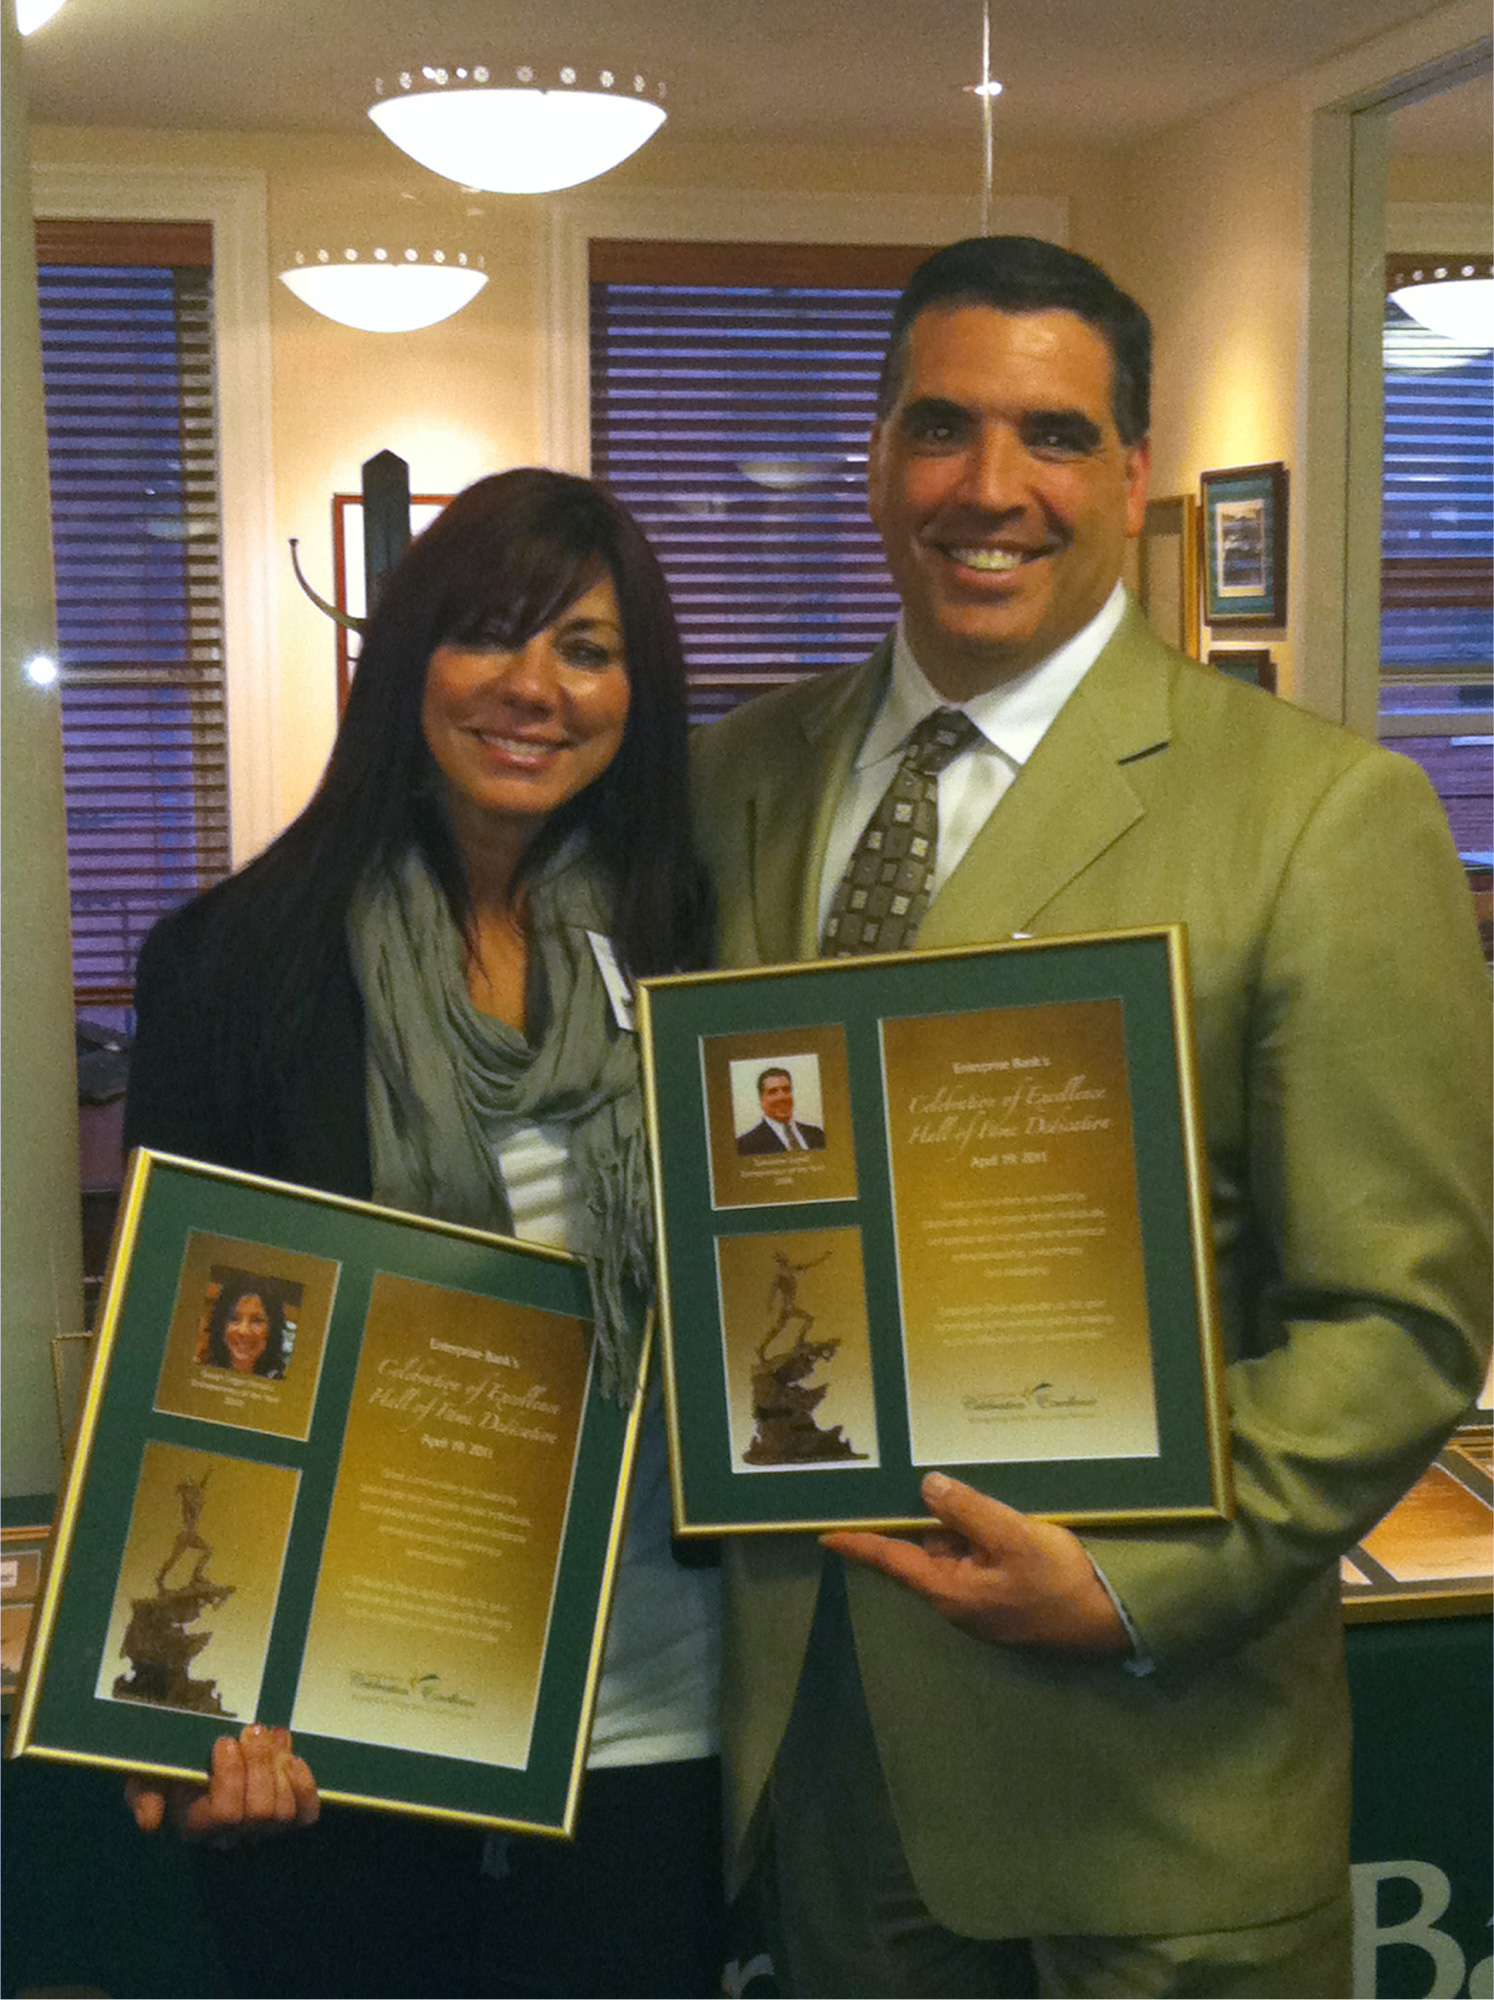 Susan Leger Ferraro and Sal Lupoli receive the Enterprise Bank Enterprise Entrepreneur Hall of Fame Award